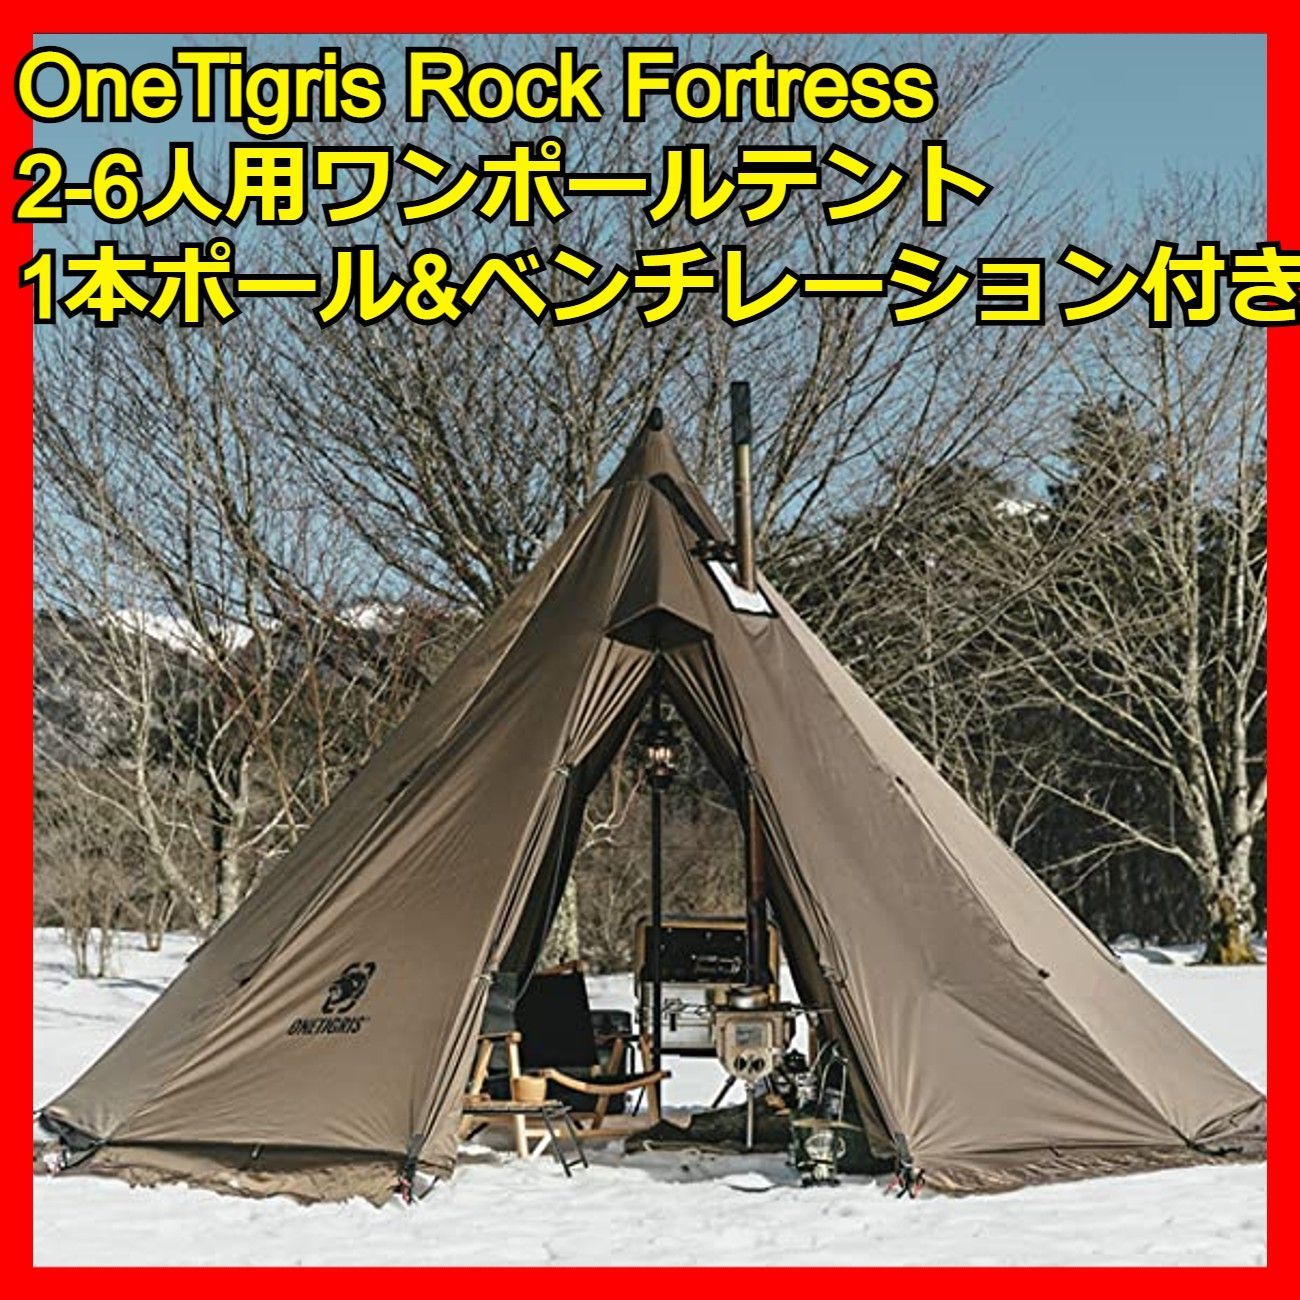 OneTigris Rock Fortressホットテント 2-6人用ワンポール